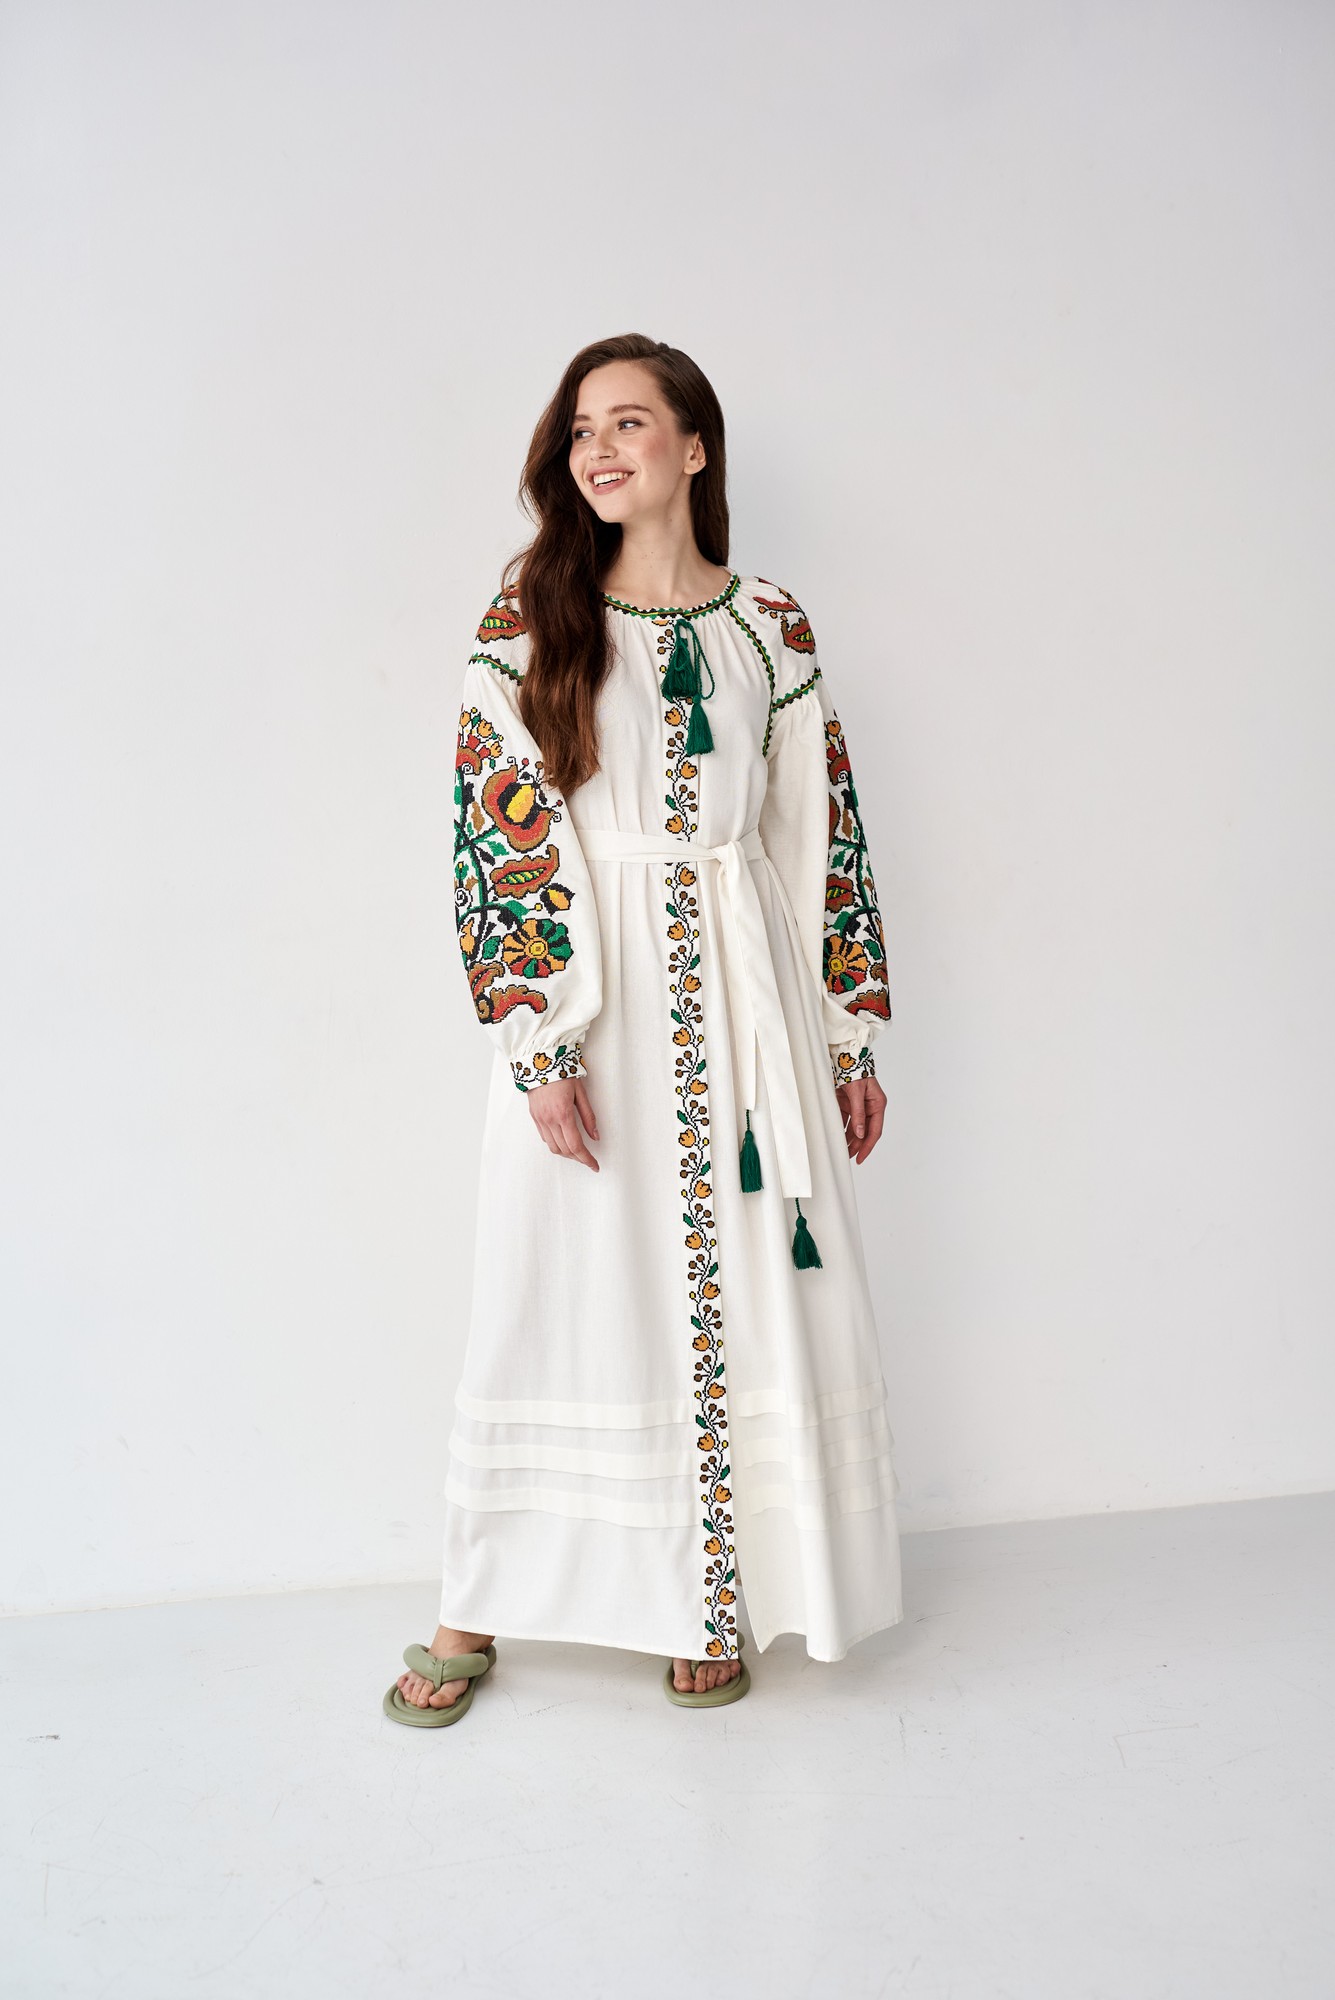 Boho Women's Ukrainian Dress with Embroidery